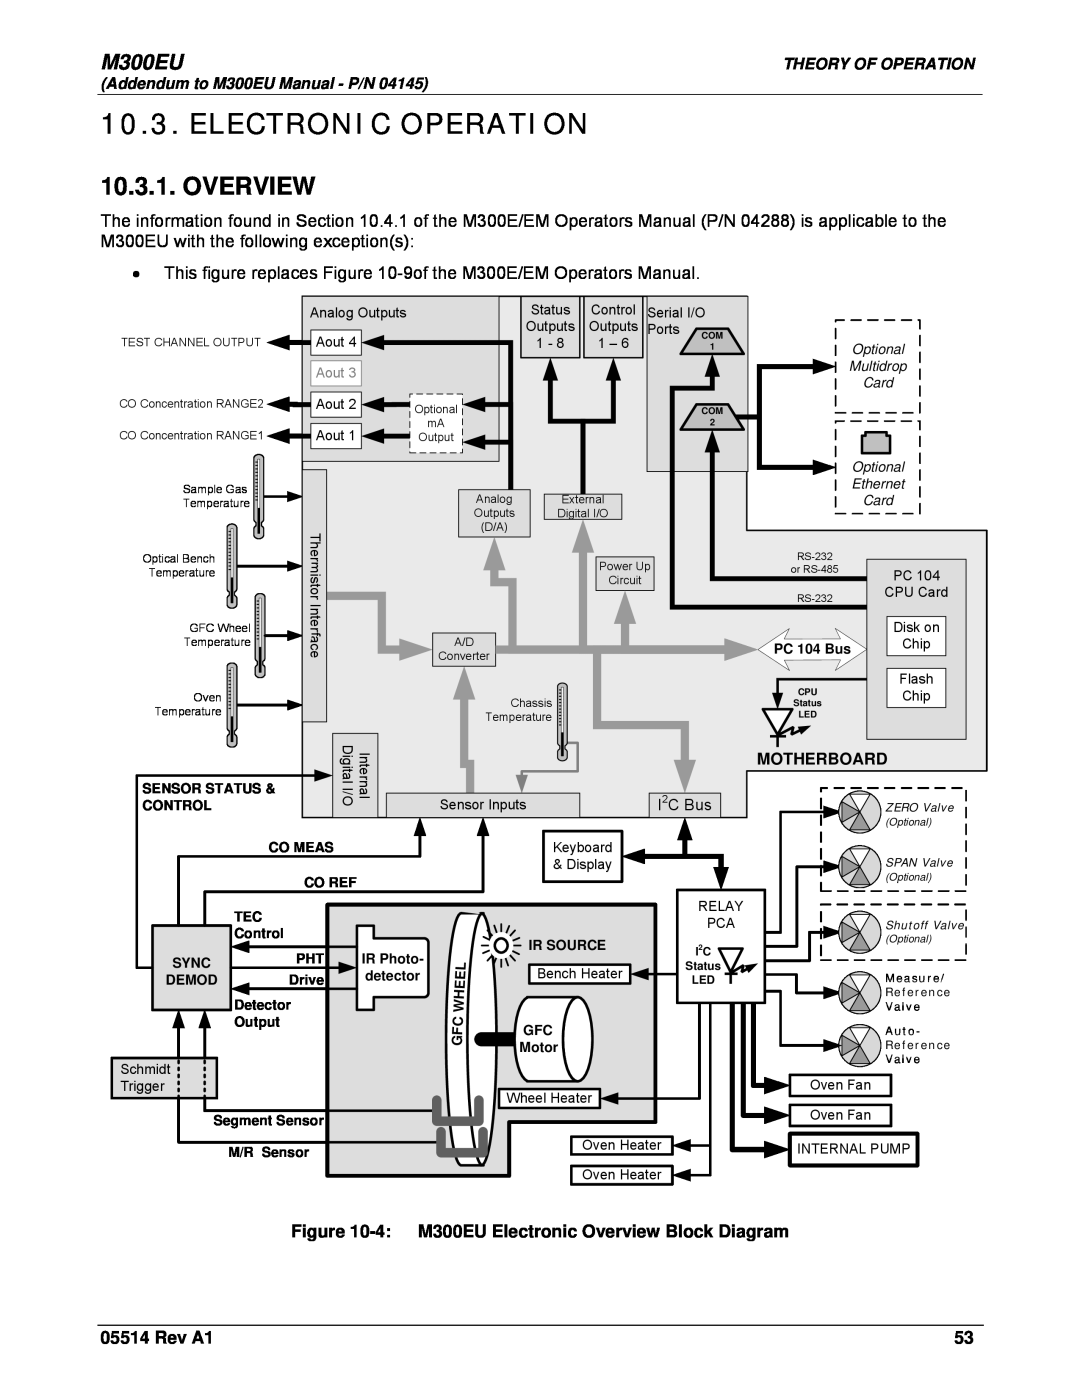 Teledyne Model 300EU manual Electronic Operation, 4 M300EU Electronic Overview Block Diagram, Rev A1, Aout 